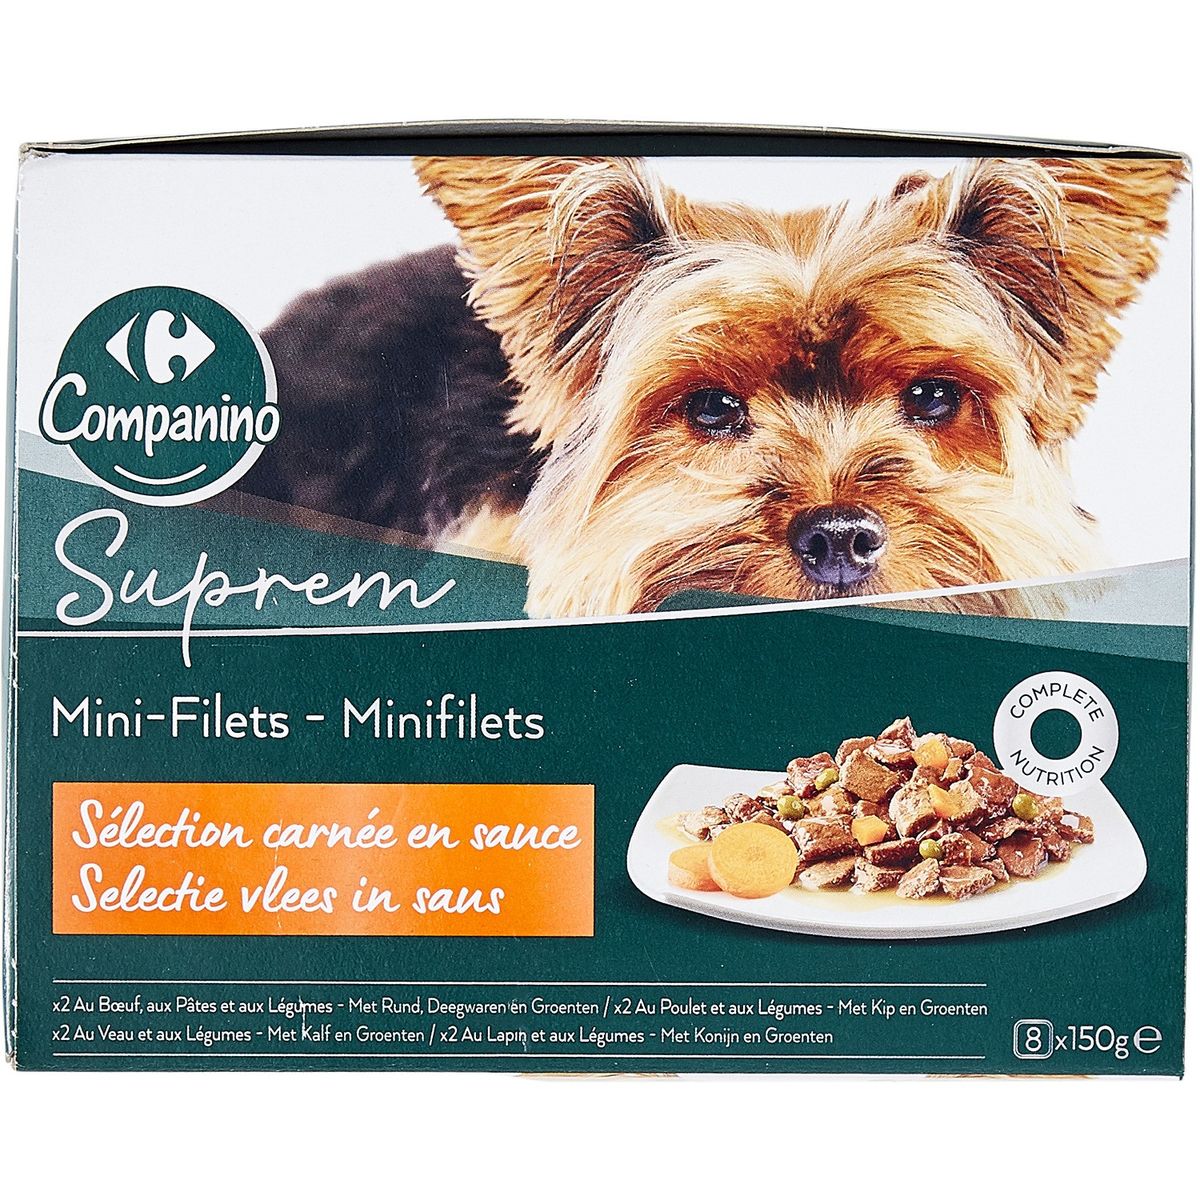 Carrefour Companino Suprem Nourriture chiens Mini-Filets sauce 8x150 g